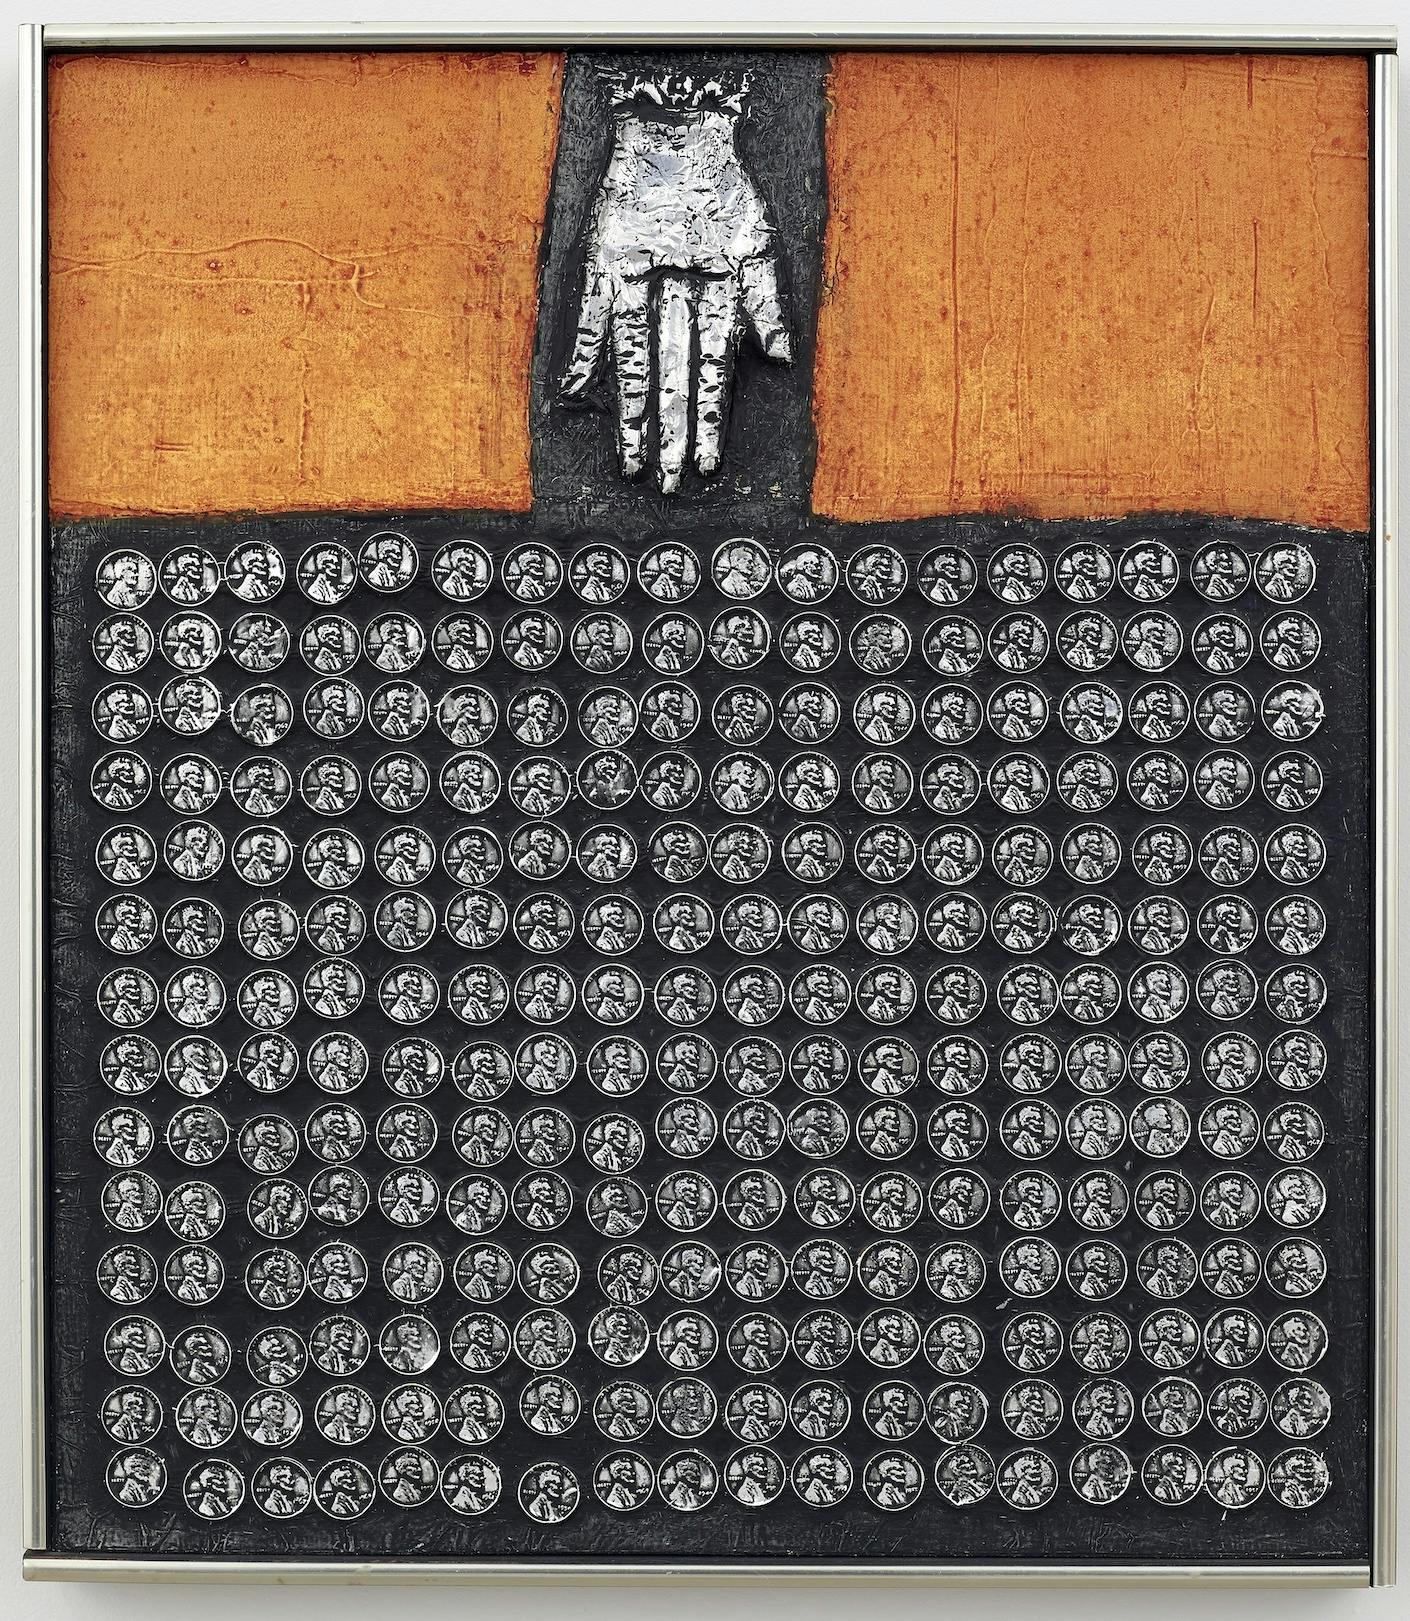 Aluminum foil painting by José Antonio Fernández-Muro of several pennies arranged in a grid.